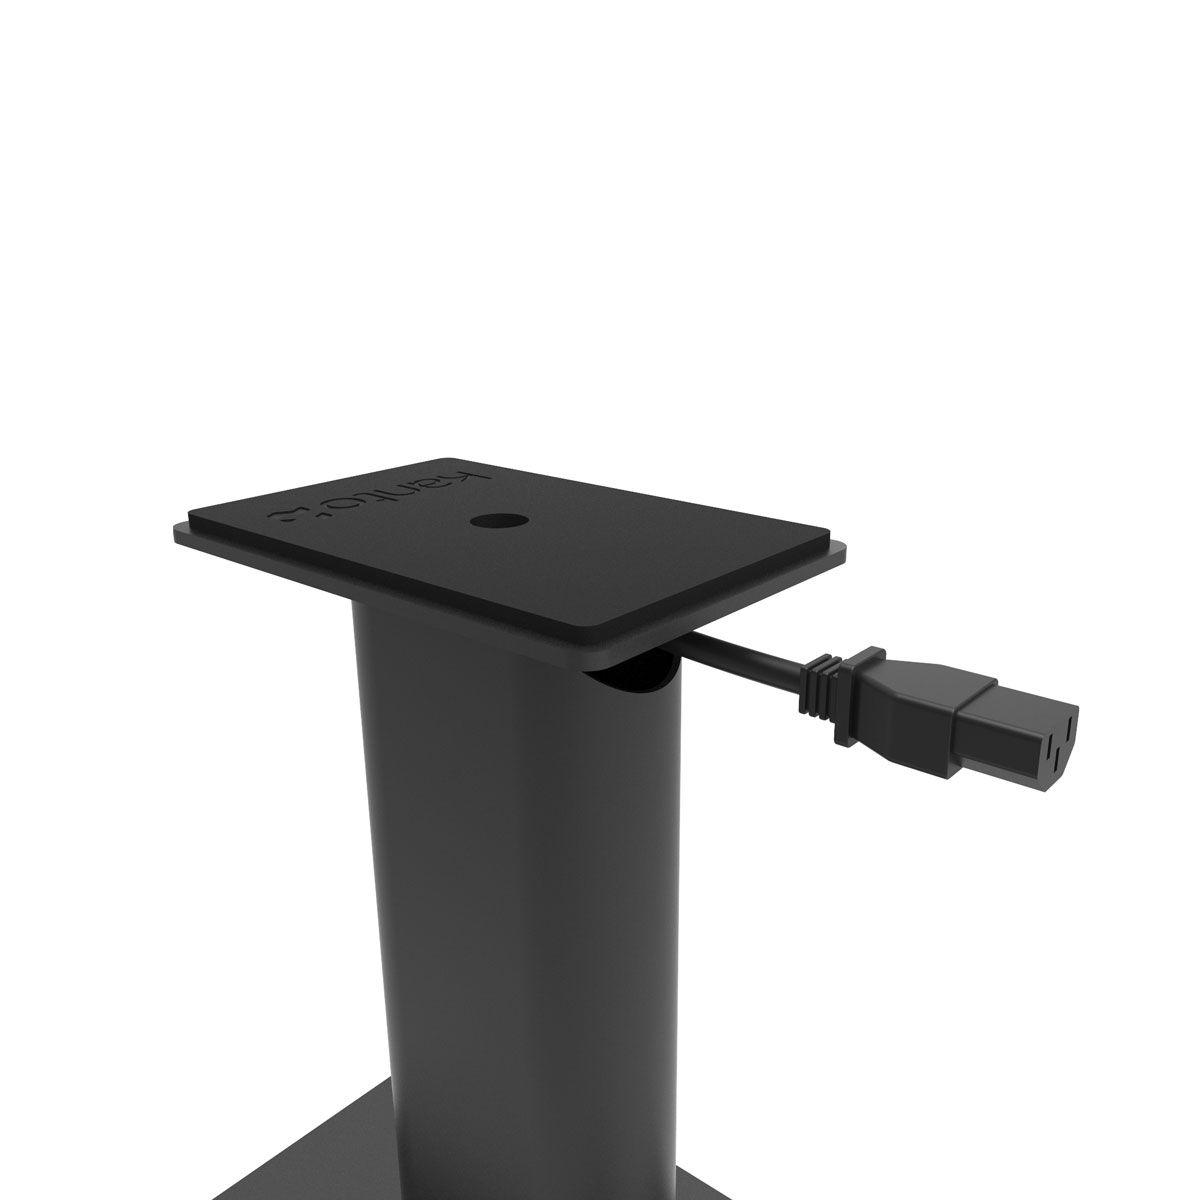 Kanto SP9 9 Inch Universal Desktop Speaker Stand - Black - Top Cable Management View